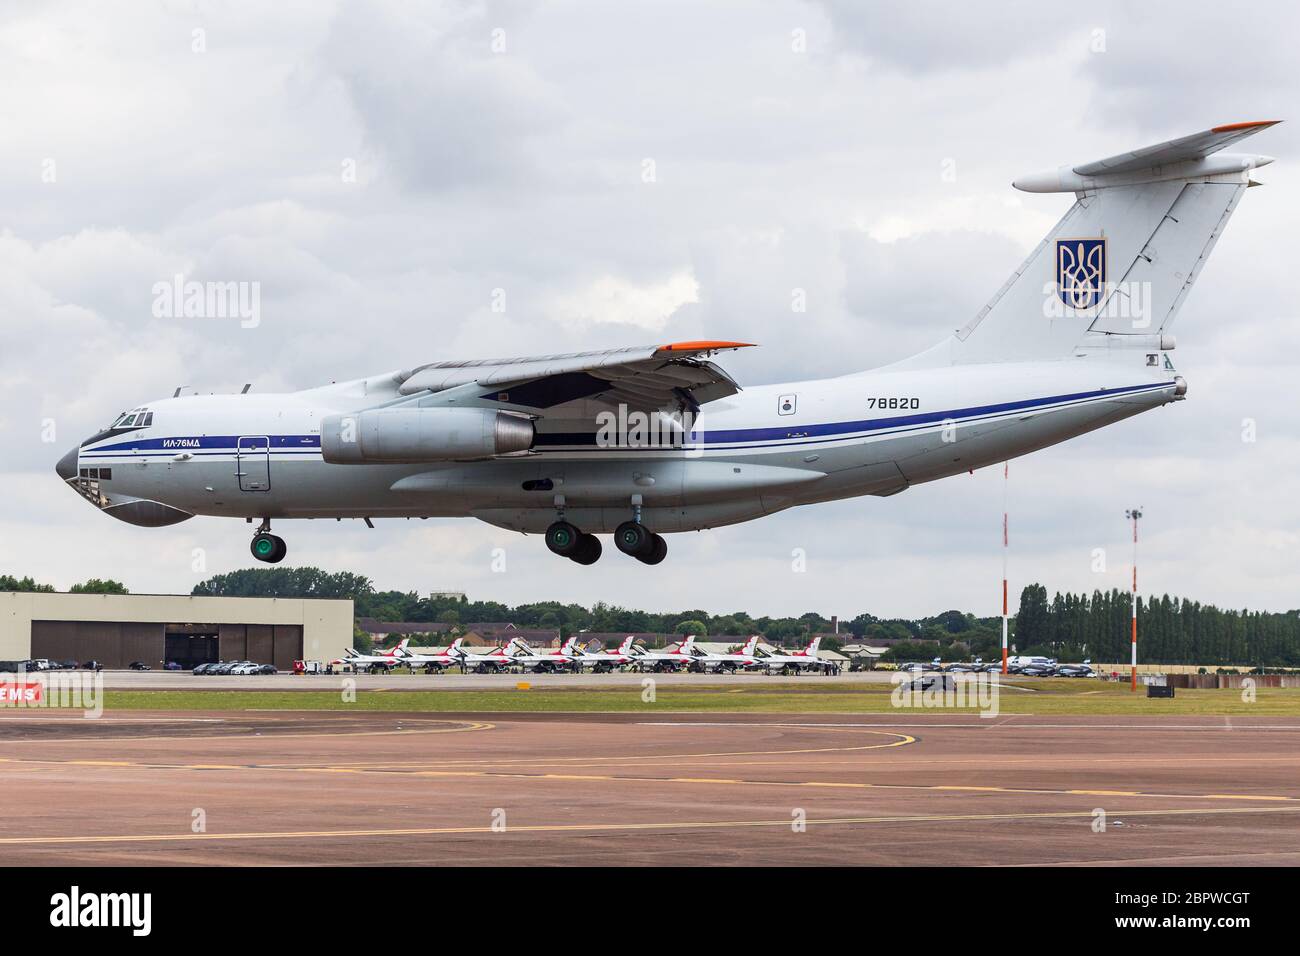 Ukrainian Air Force Ilyushin Il-76 landing at RAF Fairford in England during July 2017. Stock Photo